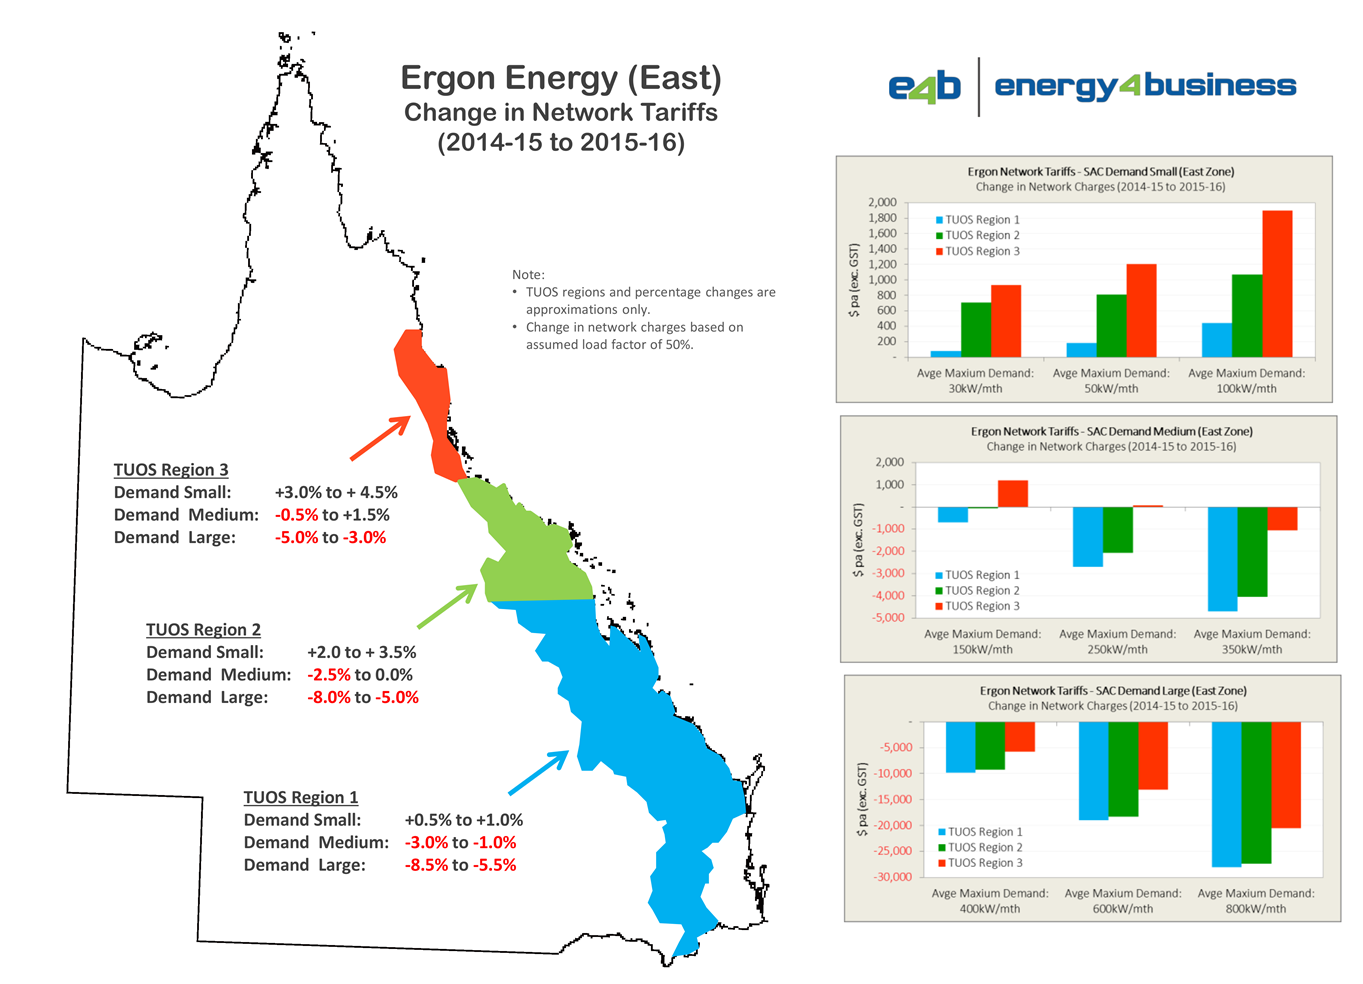 ergon-network-tariffs-2015-16-energy-4-business